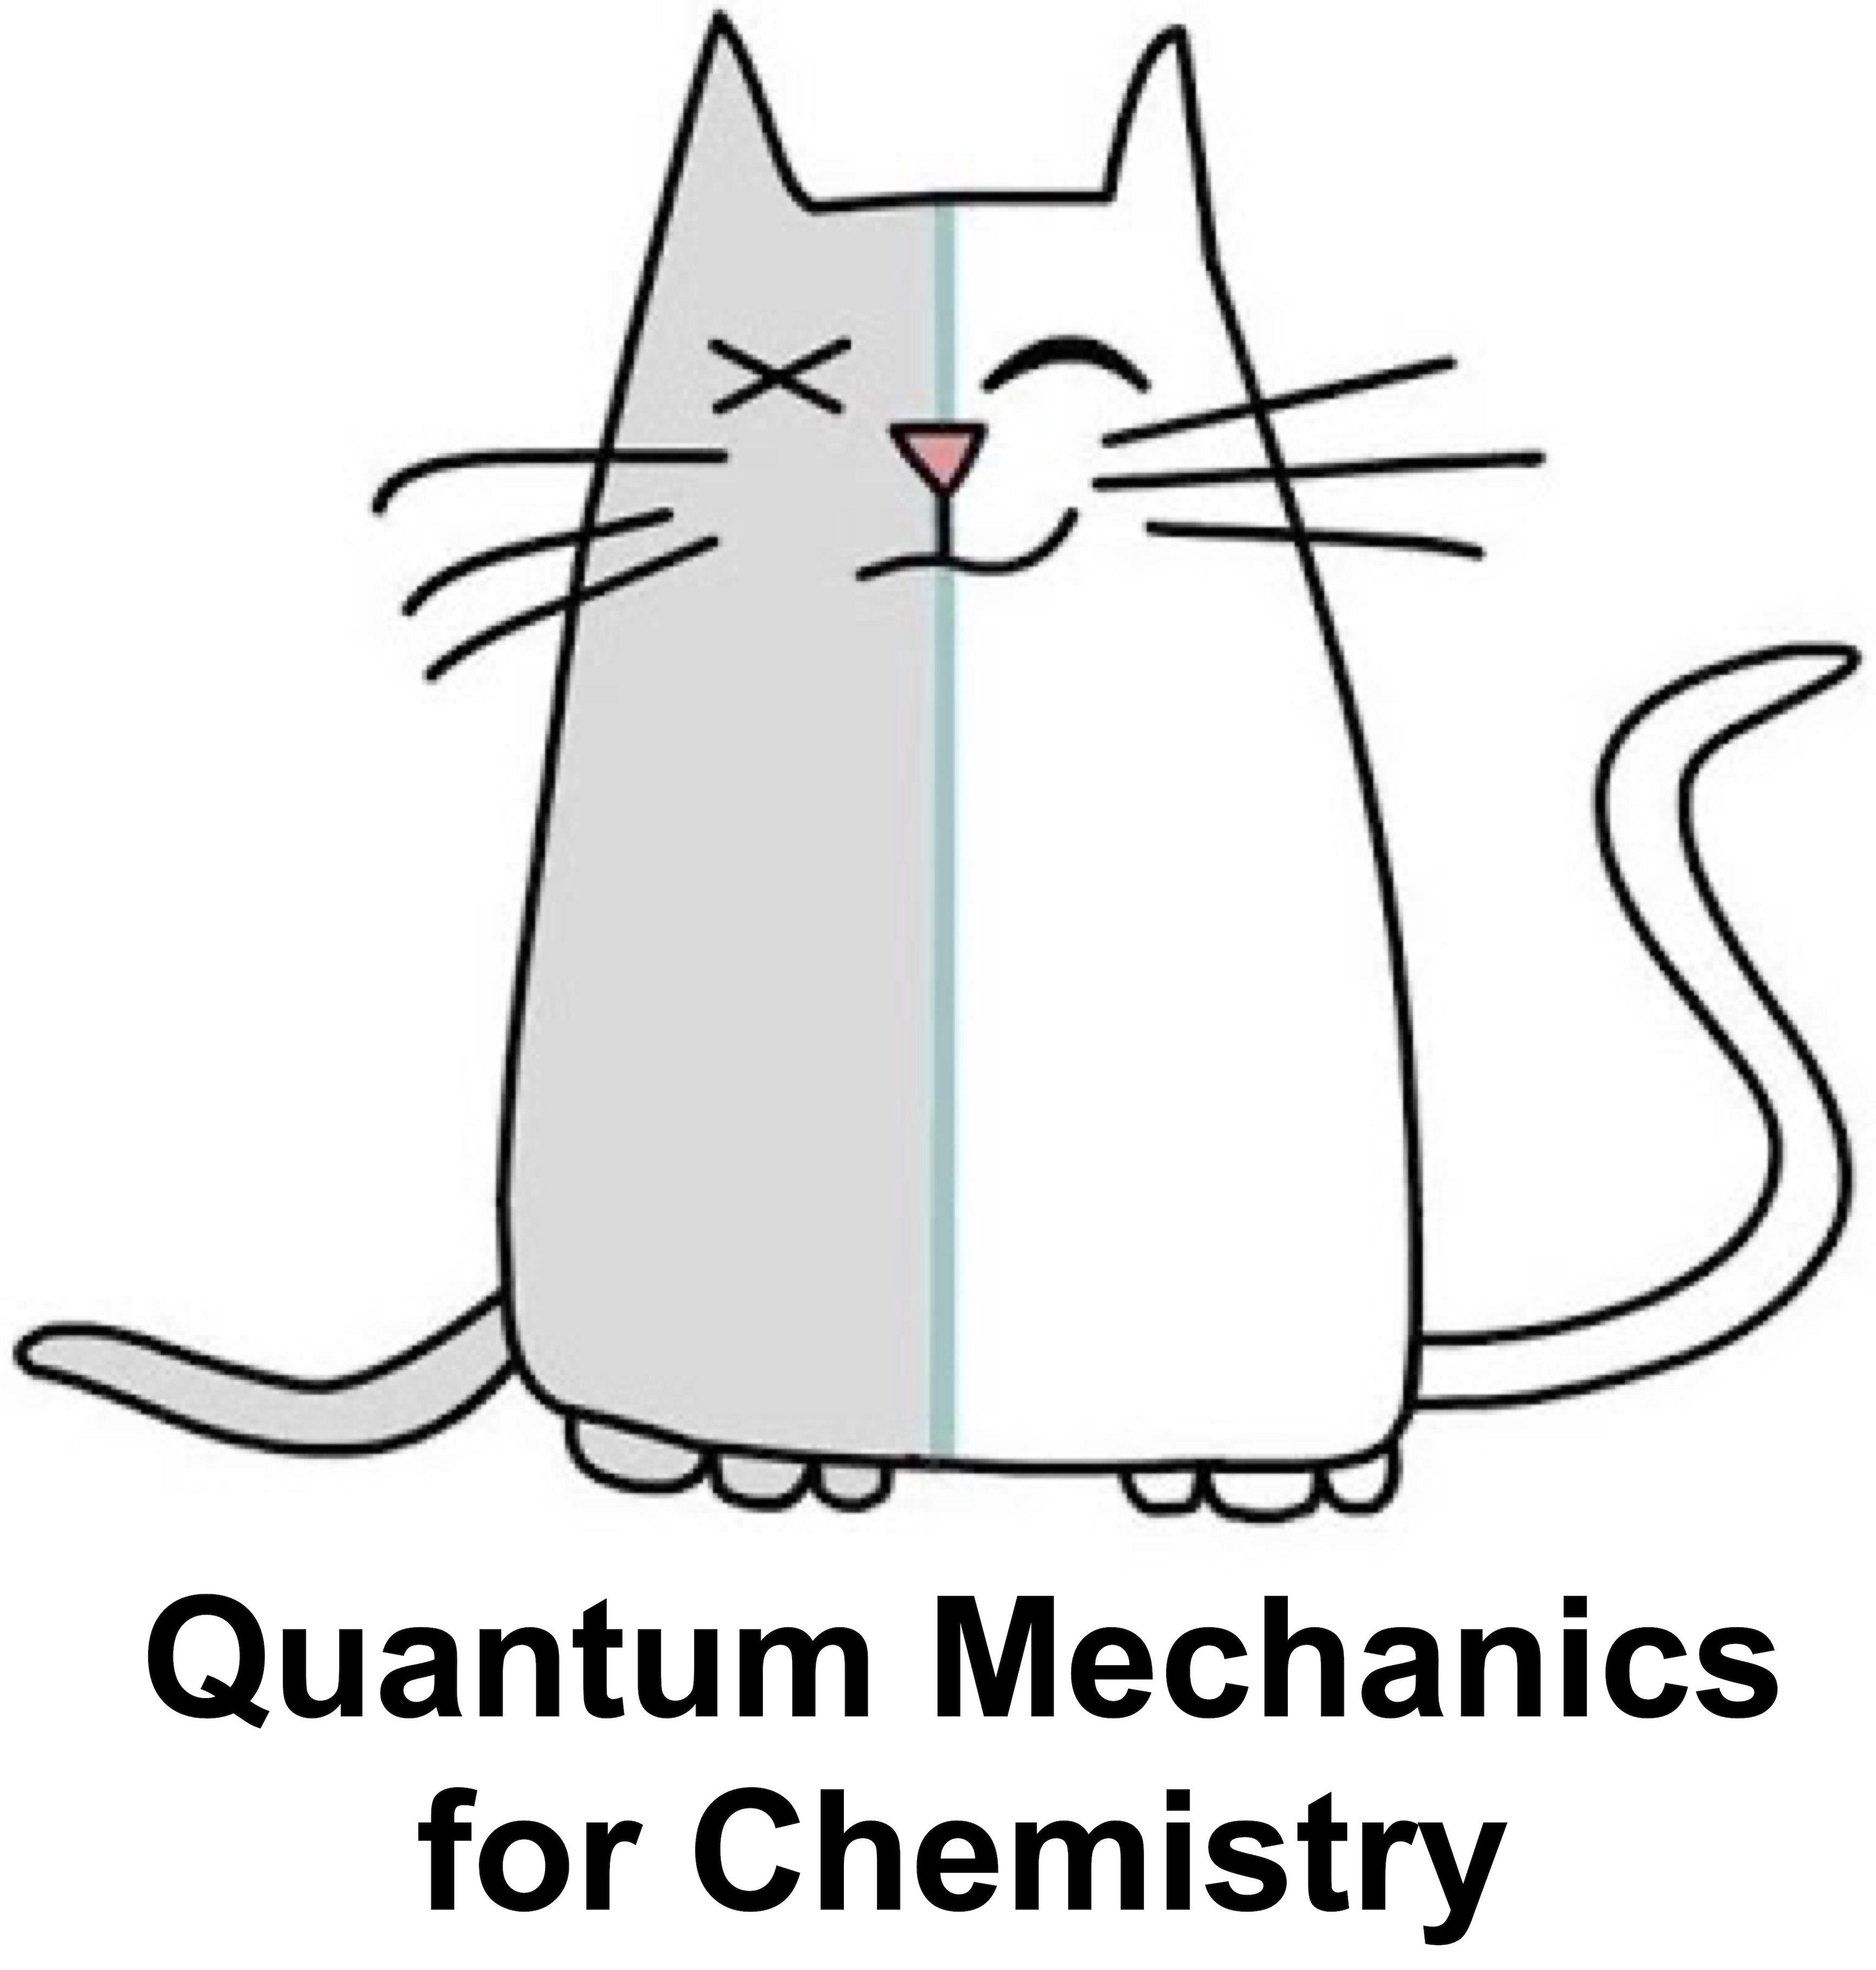 Quantum Mechanics for Chemistry - Home